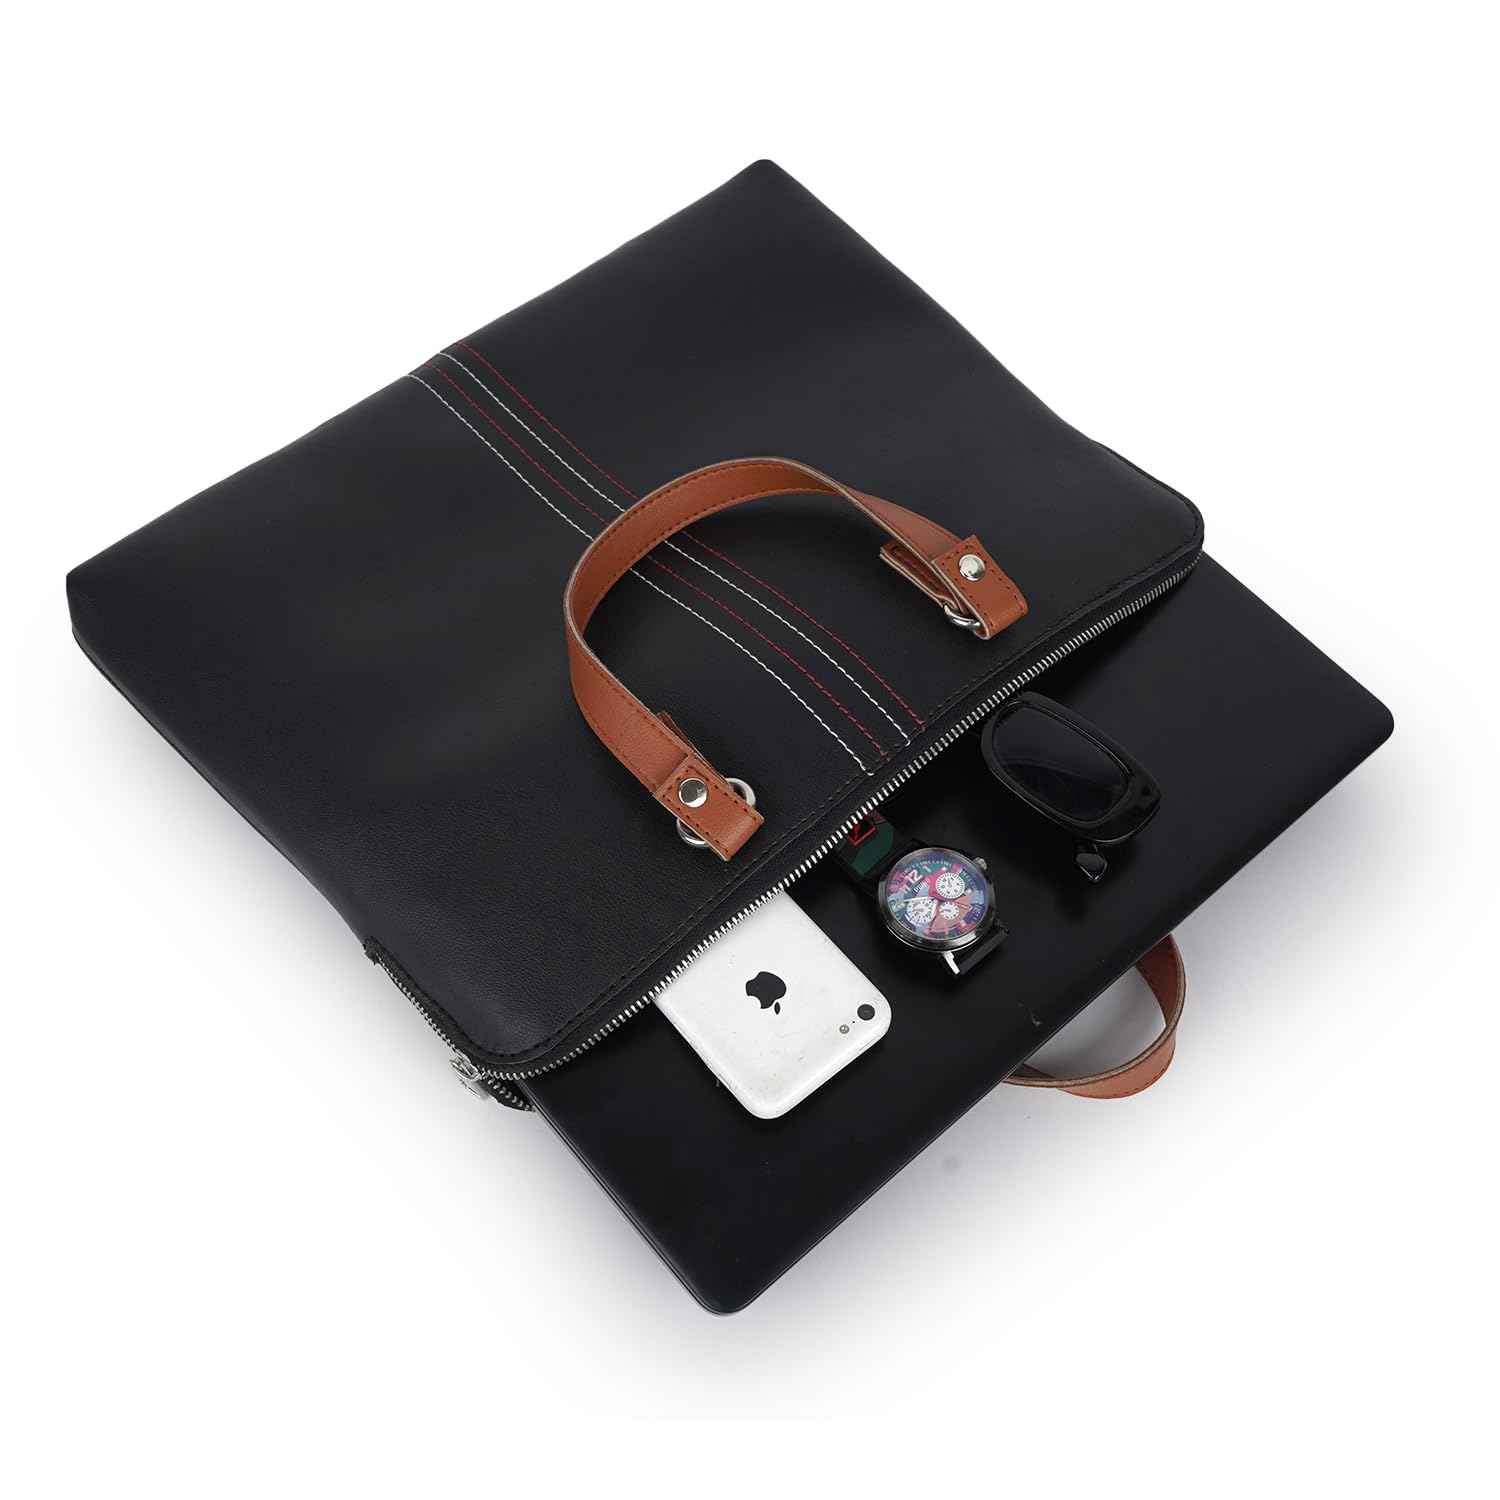 CIMONI® Premium Vegan Leather Laptop Bag Trendy Office Briefcase Hand Bag College Daytrip School Handheld Business Messenger Bag For Men